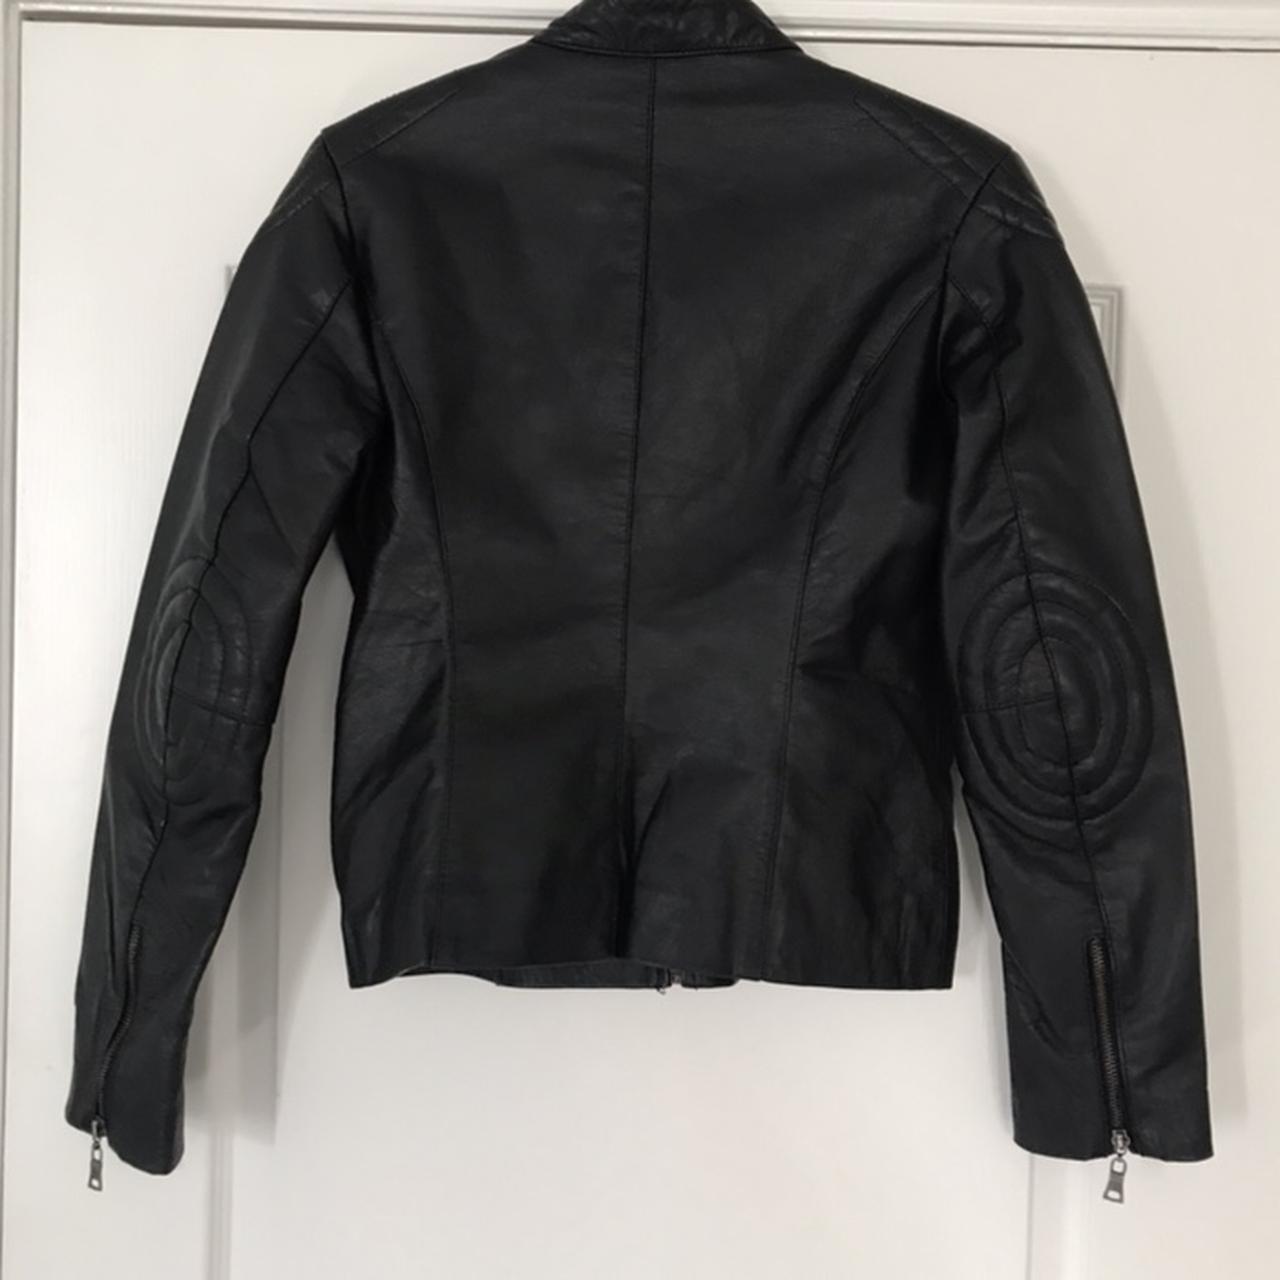 HEELI LEATHER JACKET - Real leather biker jacket 😍... - Depop